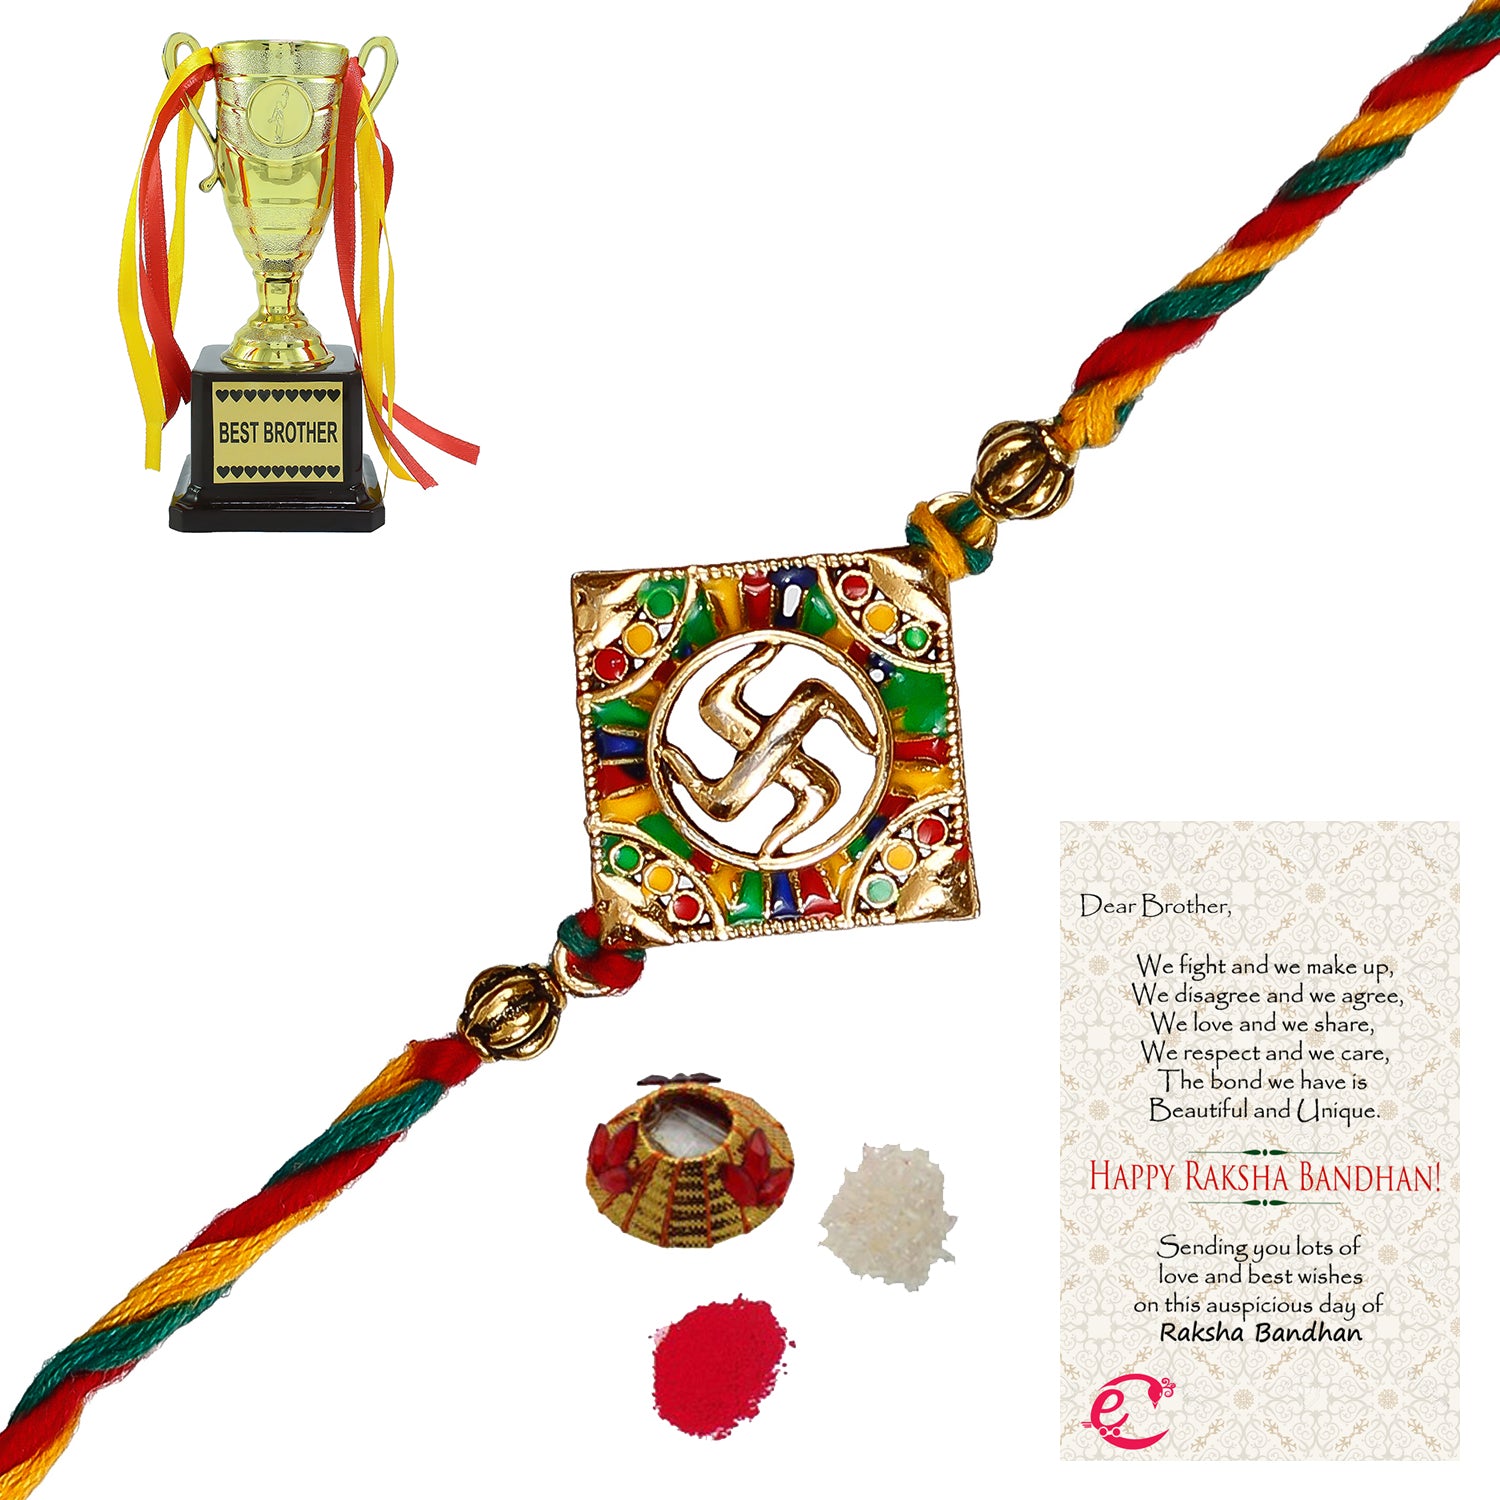 Designer Religious Swastik Rakhi with Best Brother Trophy and Roli Tikka Matki, Best Wishes Greeting Card